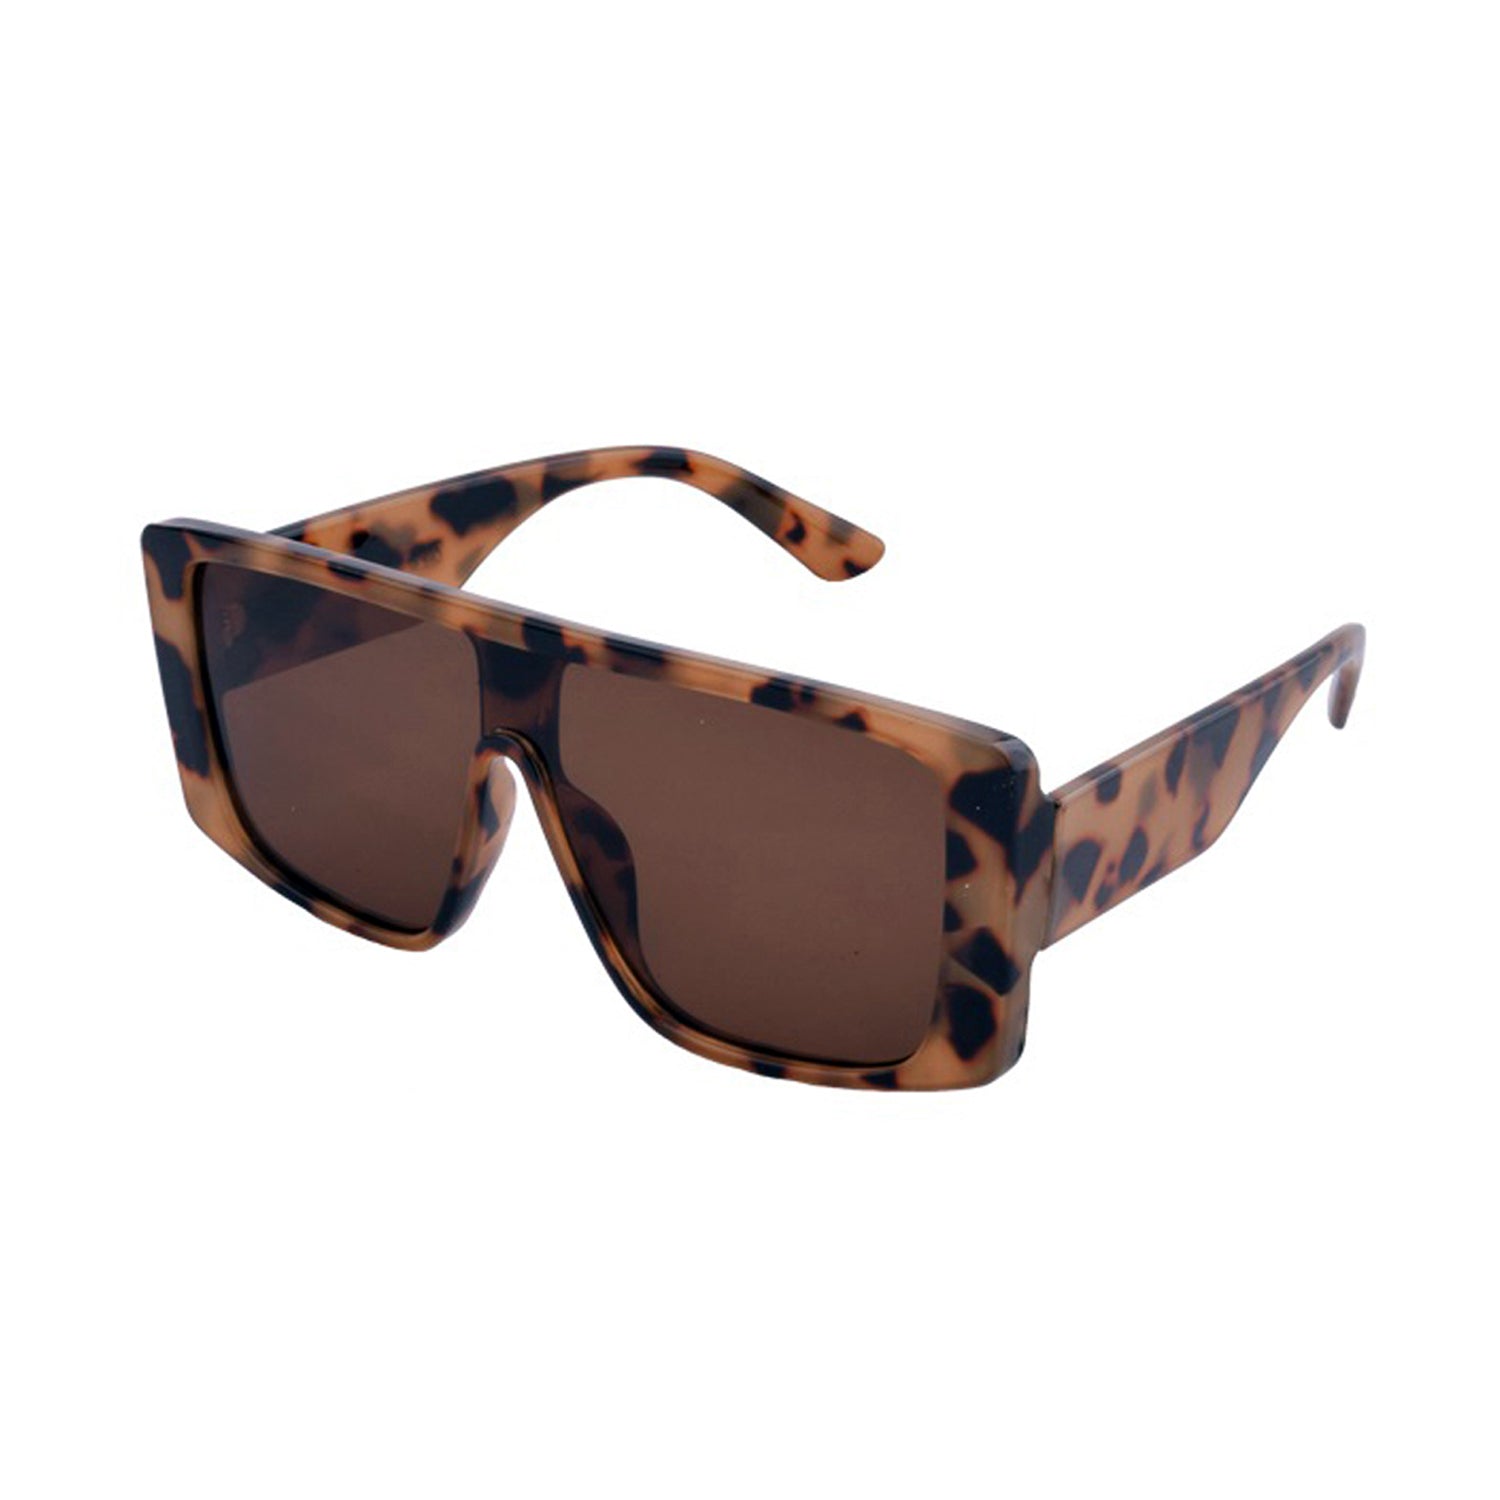 Empire Cove Sunglasses Oversized Square Designer Style Trendy Retro Sunnies Shades